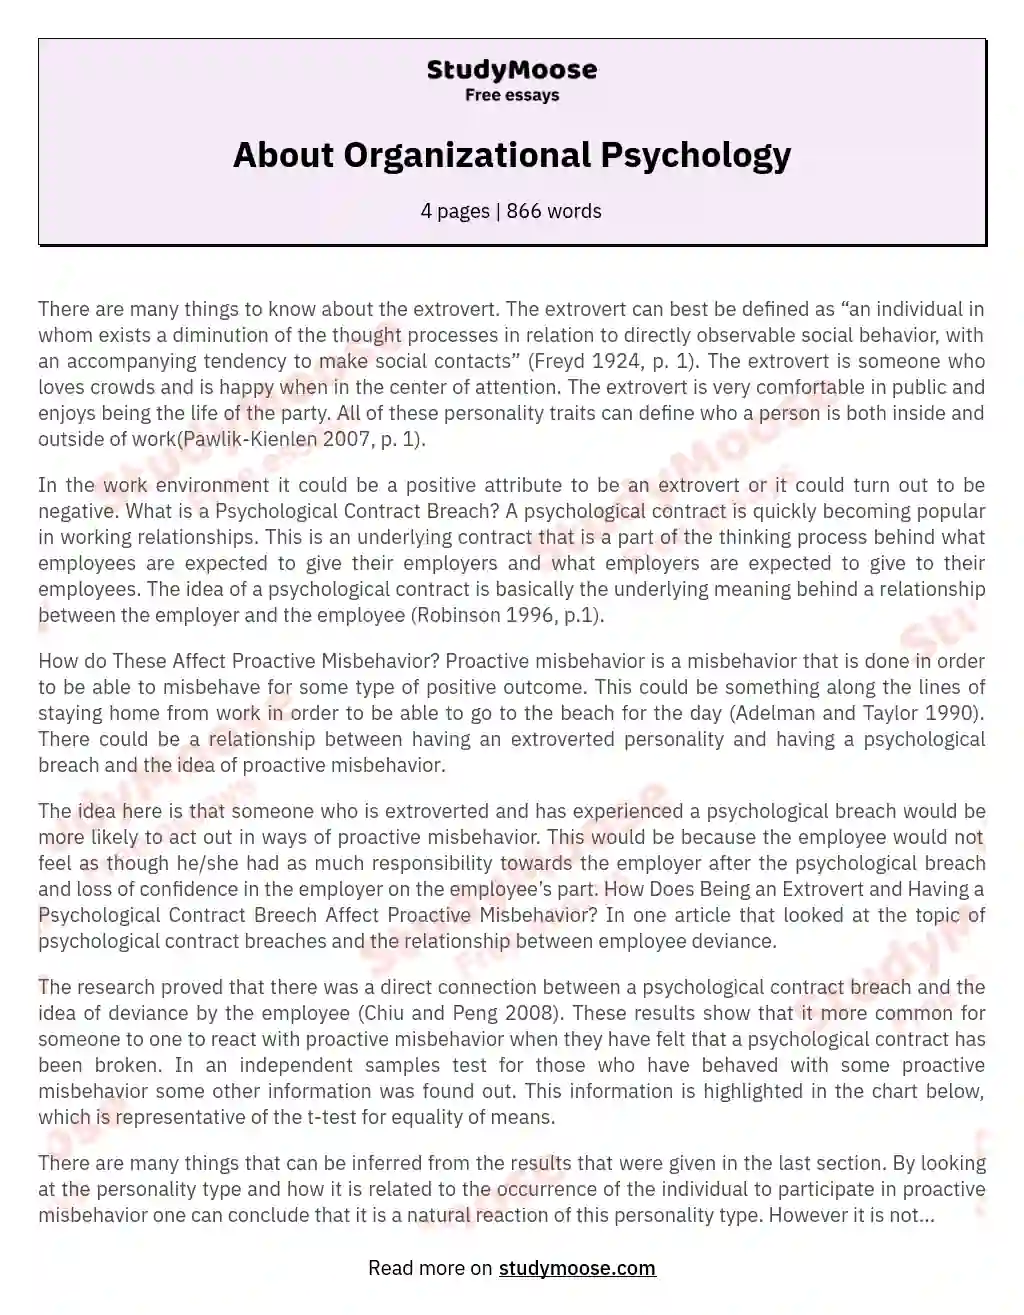 About Organizational Psychology essay